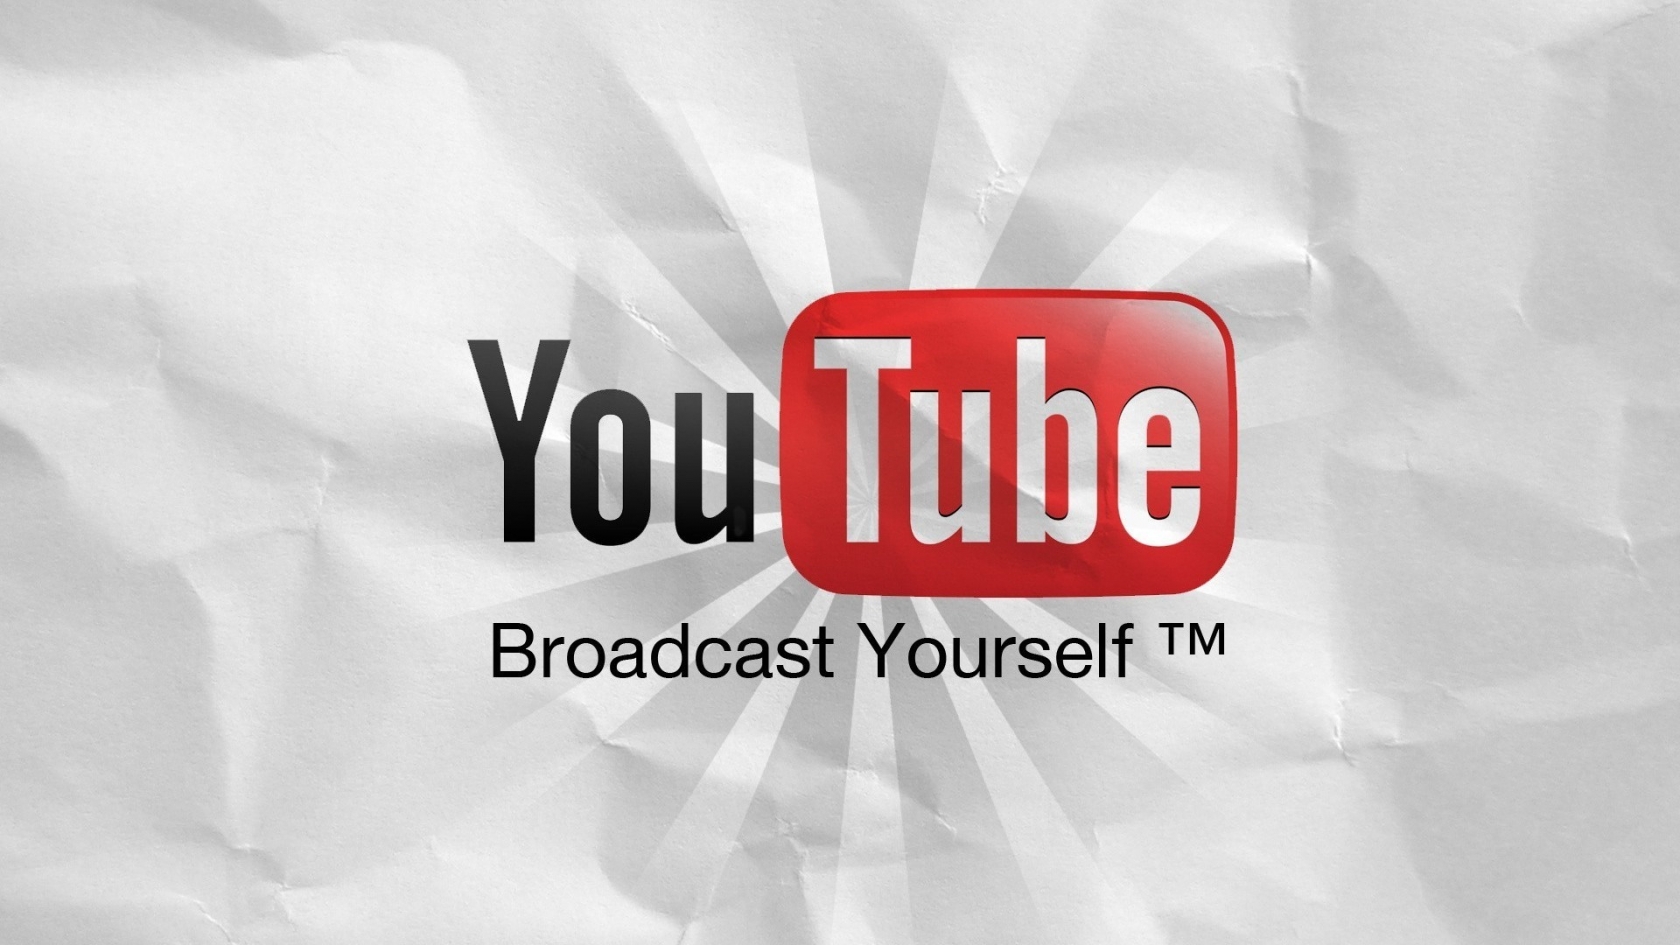 YouTube for 1680 x 945 HDTV resolution